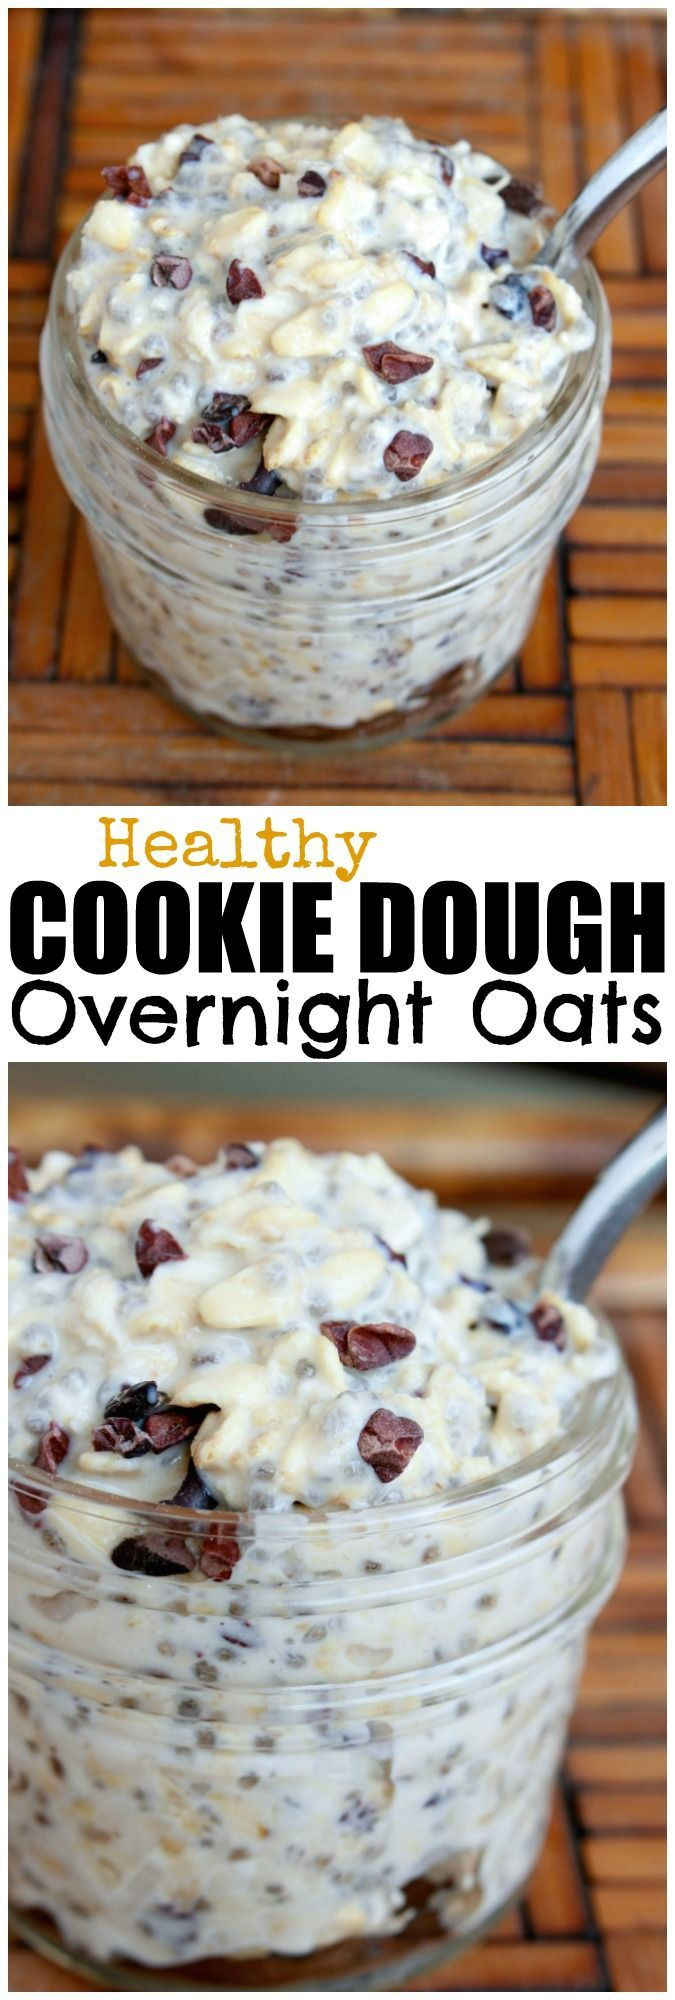 Overnight Oats Healthy
 Best 25 Healthy overnight oats ideas on Pinterest